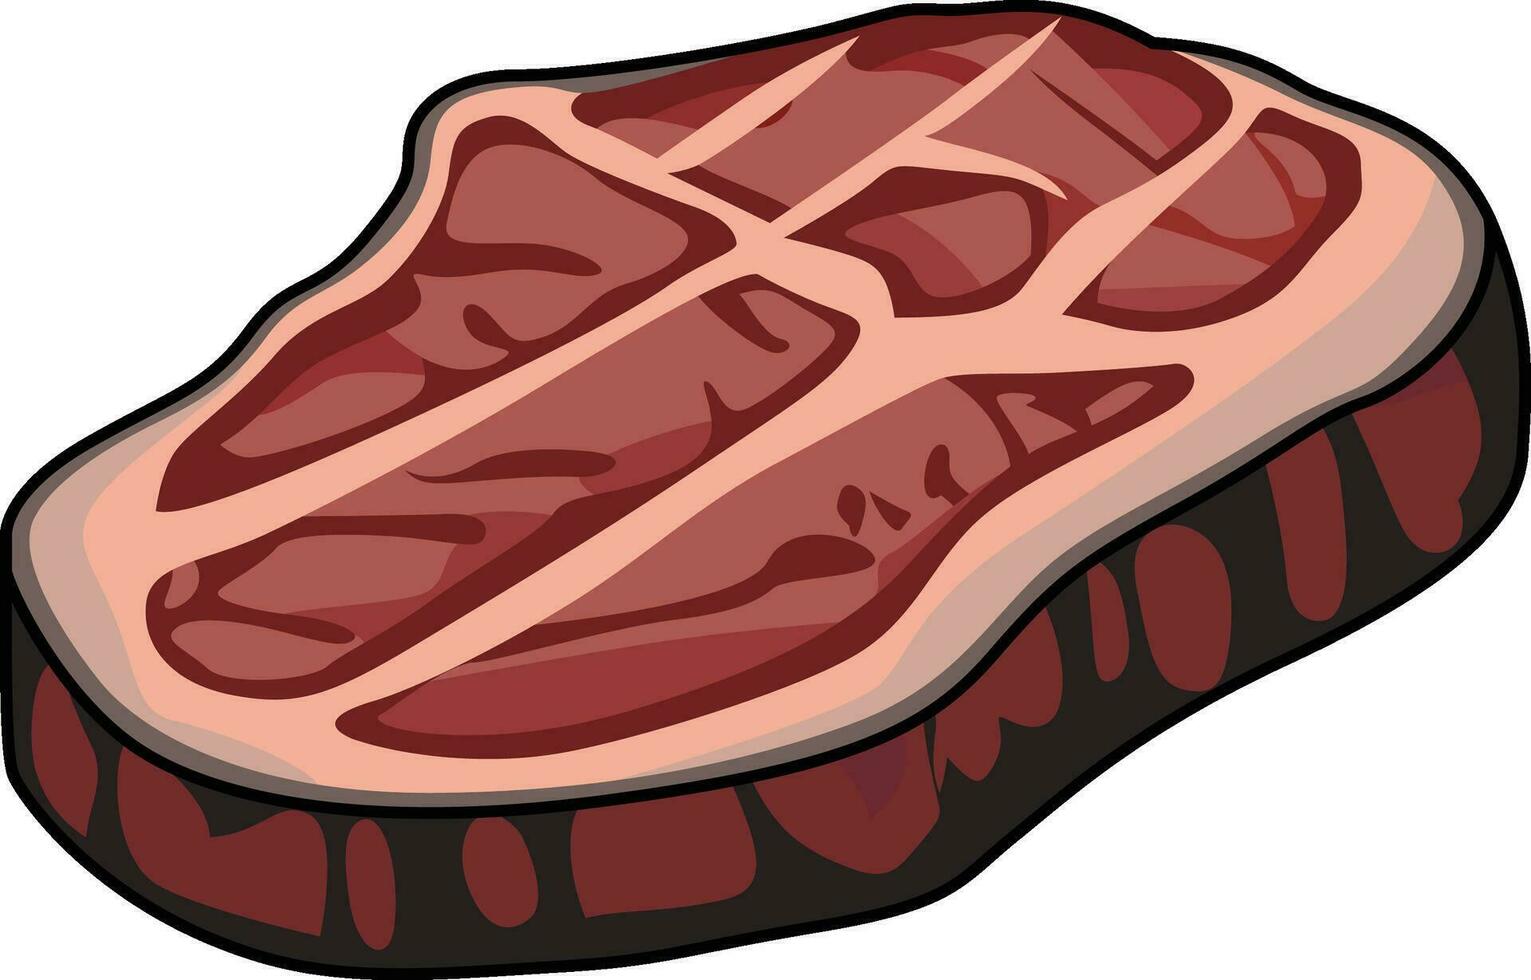 detallado cocido bife, valores vector ilustración, barbacoa filete rebanada, carne rebanada valores vector imagen